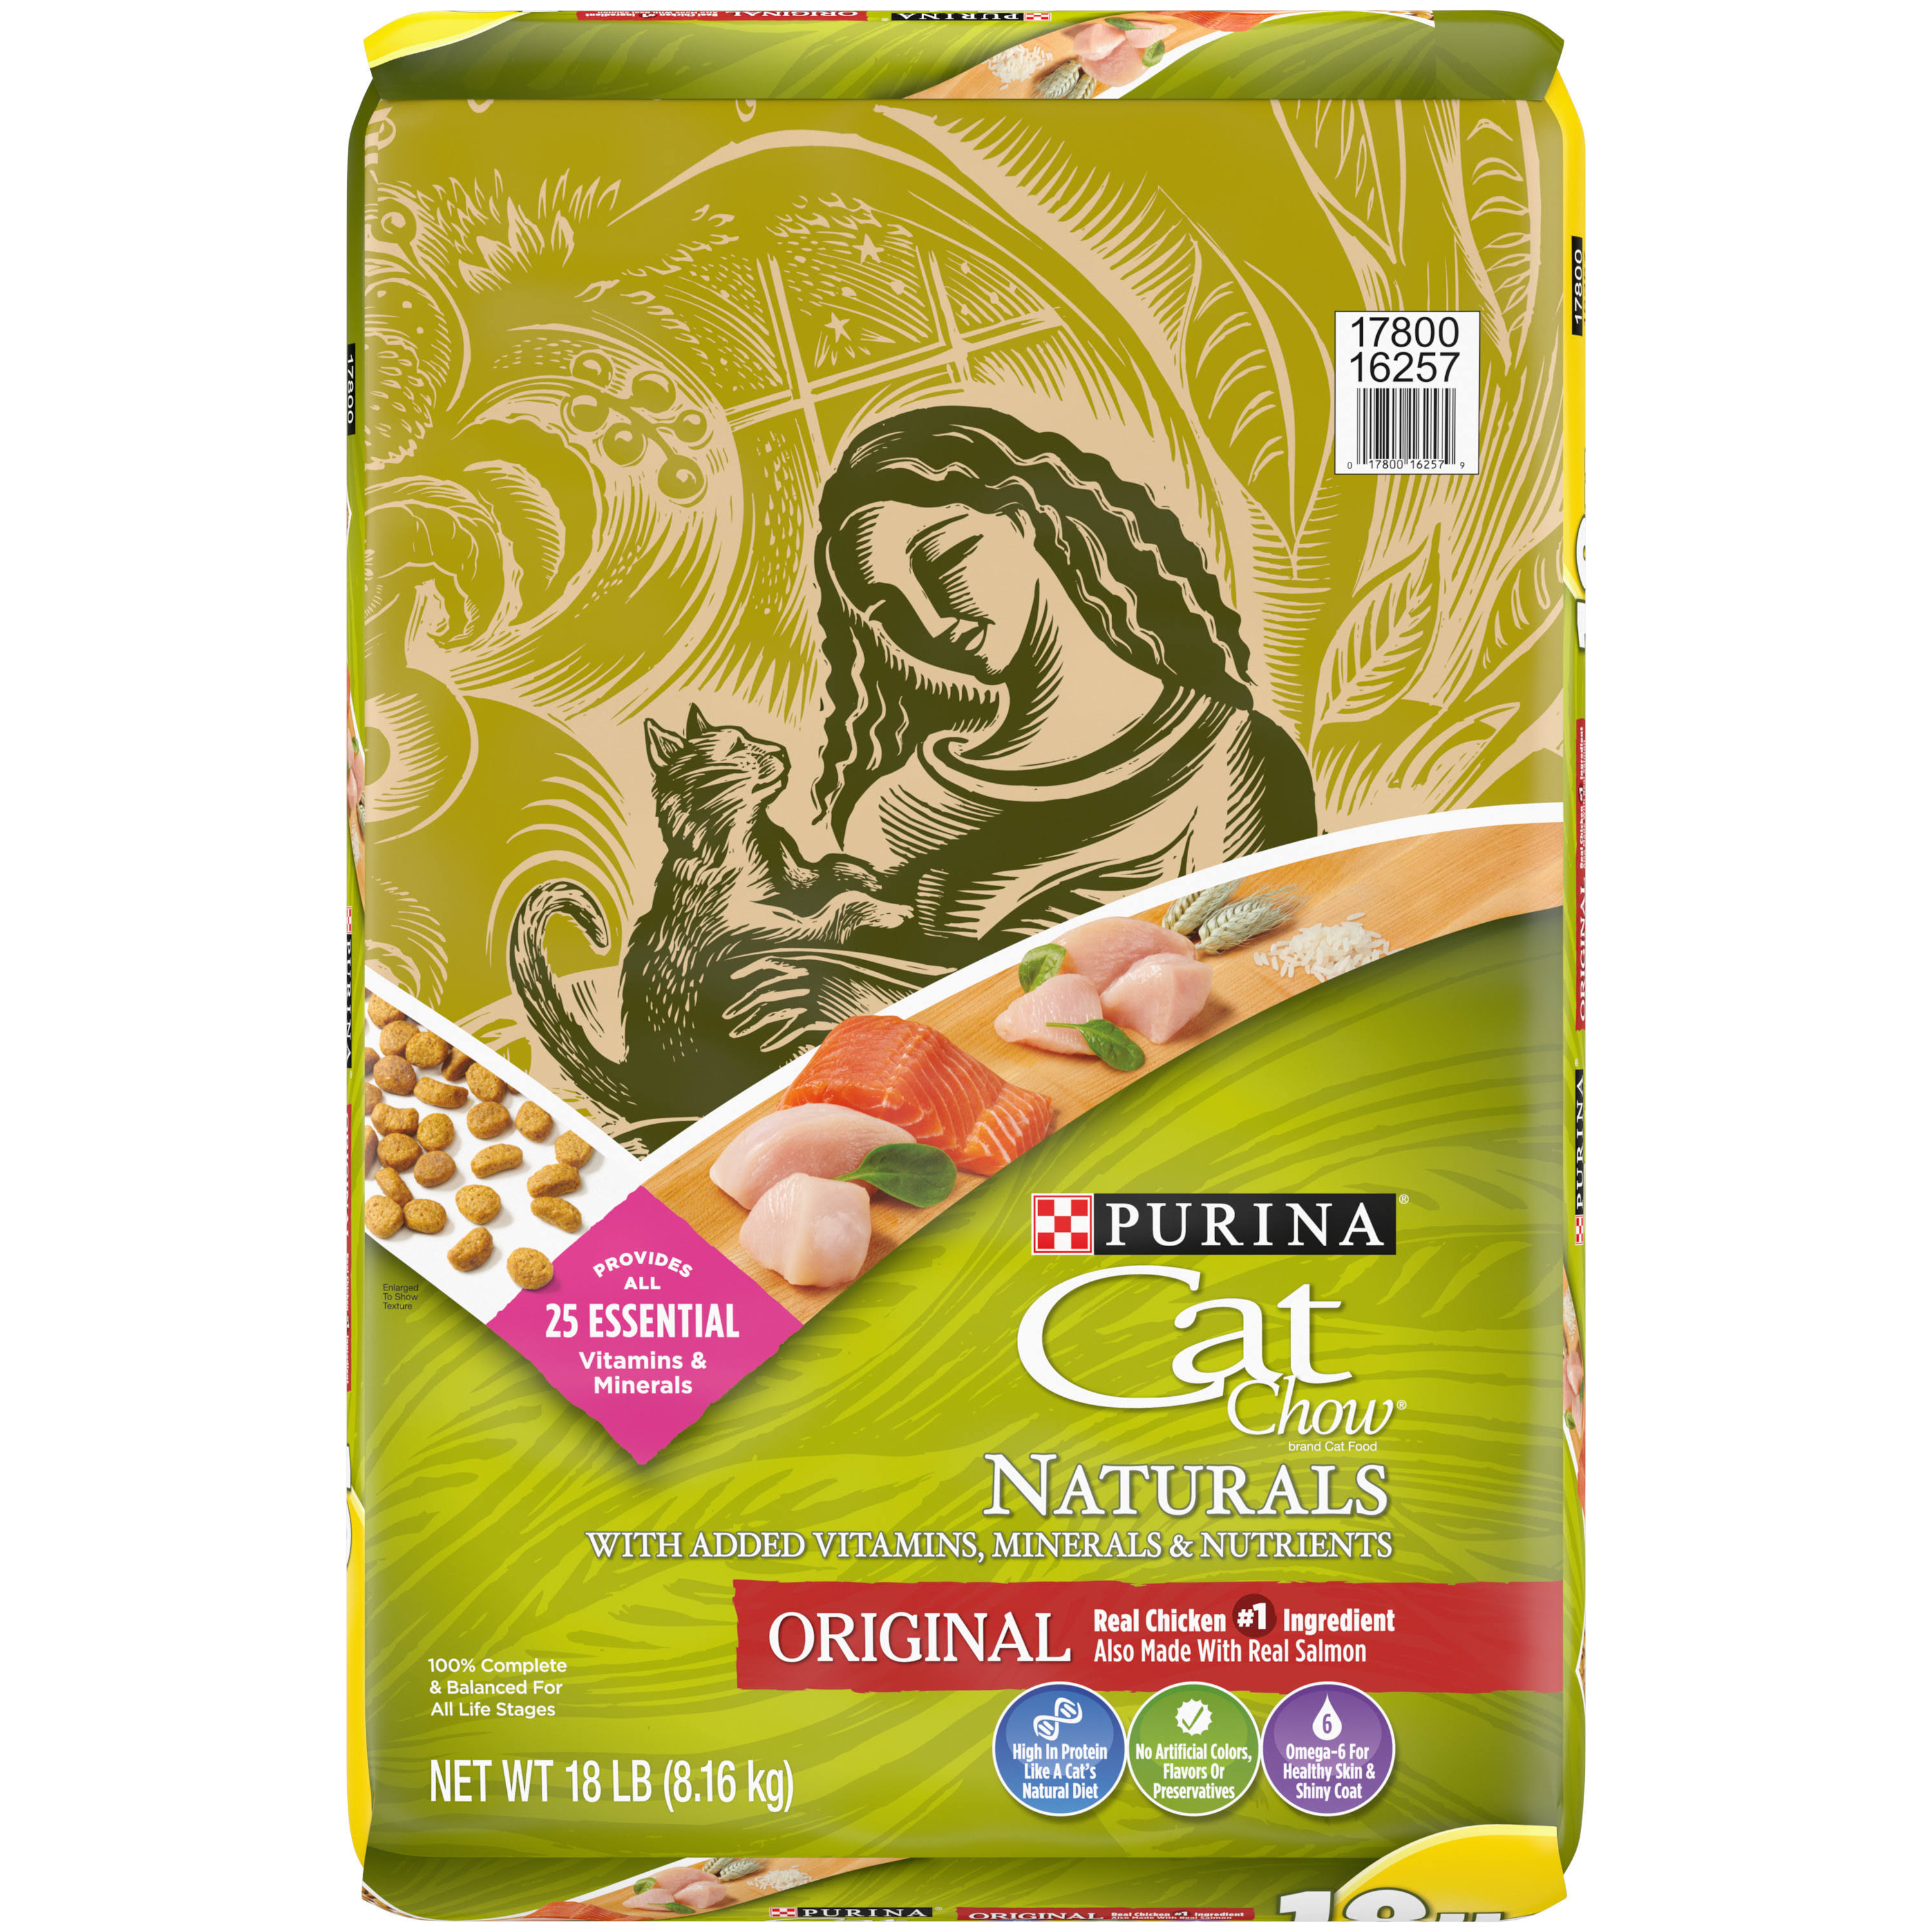 Purina Cat Chow Naturals Original Plus Vitamins & Minerals Cat Food 8.2kg. Bag | Cats | 30 Day Money Back Guarantee | Best Price Guarantee